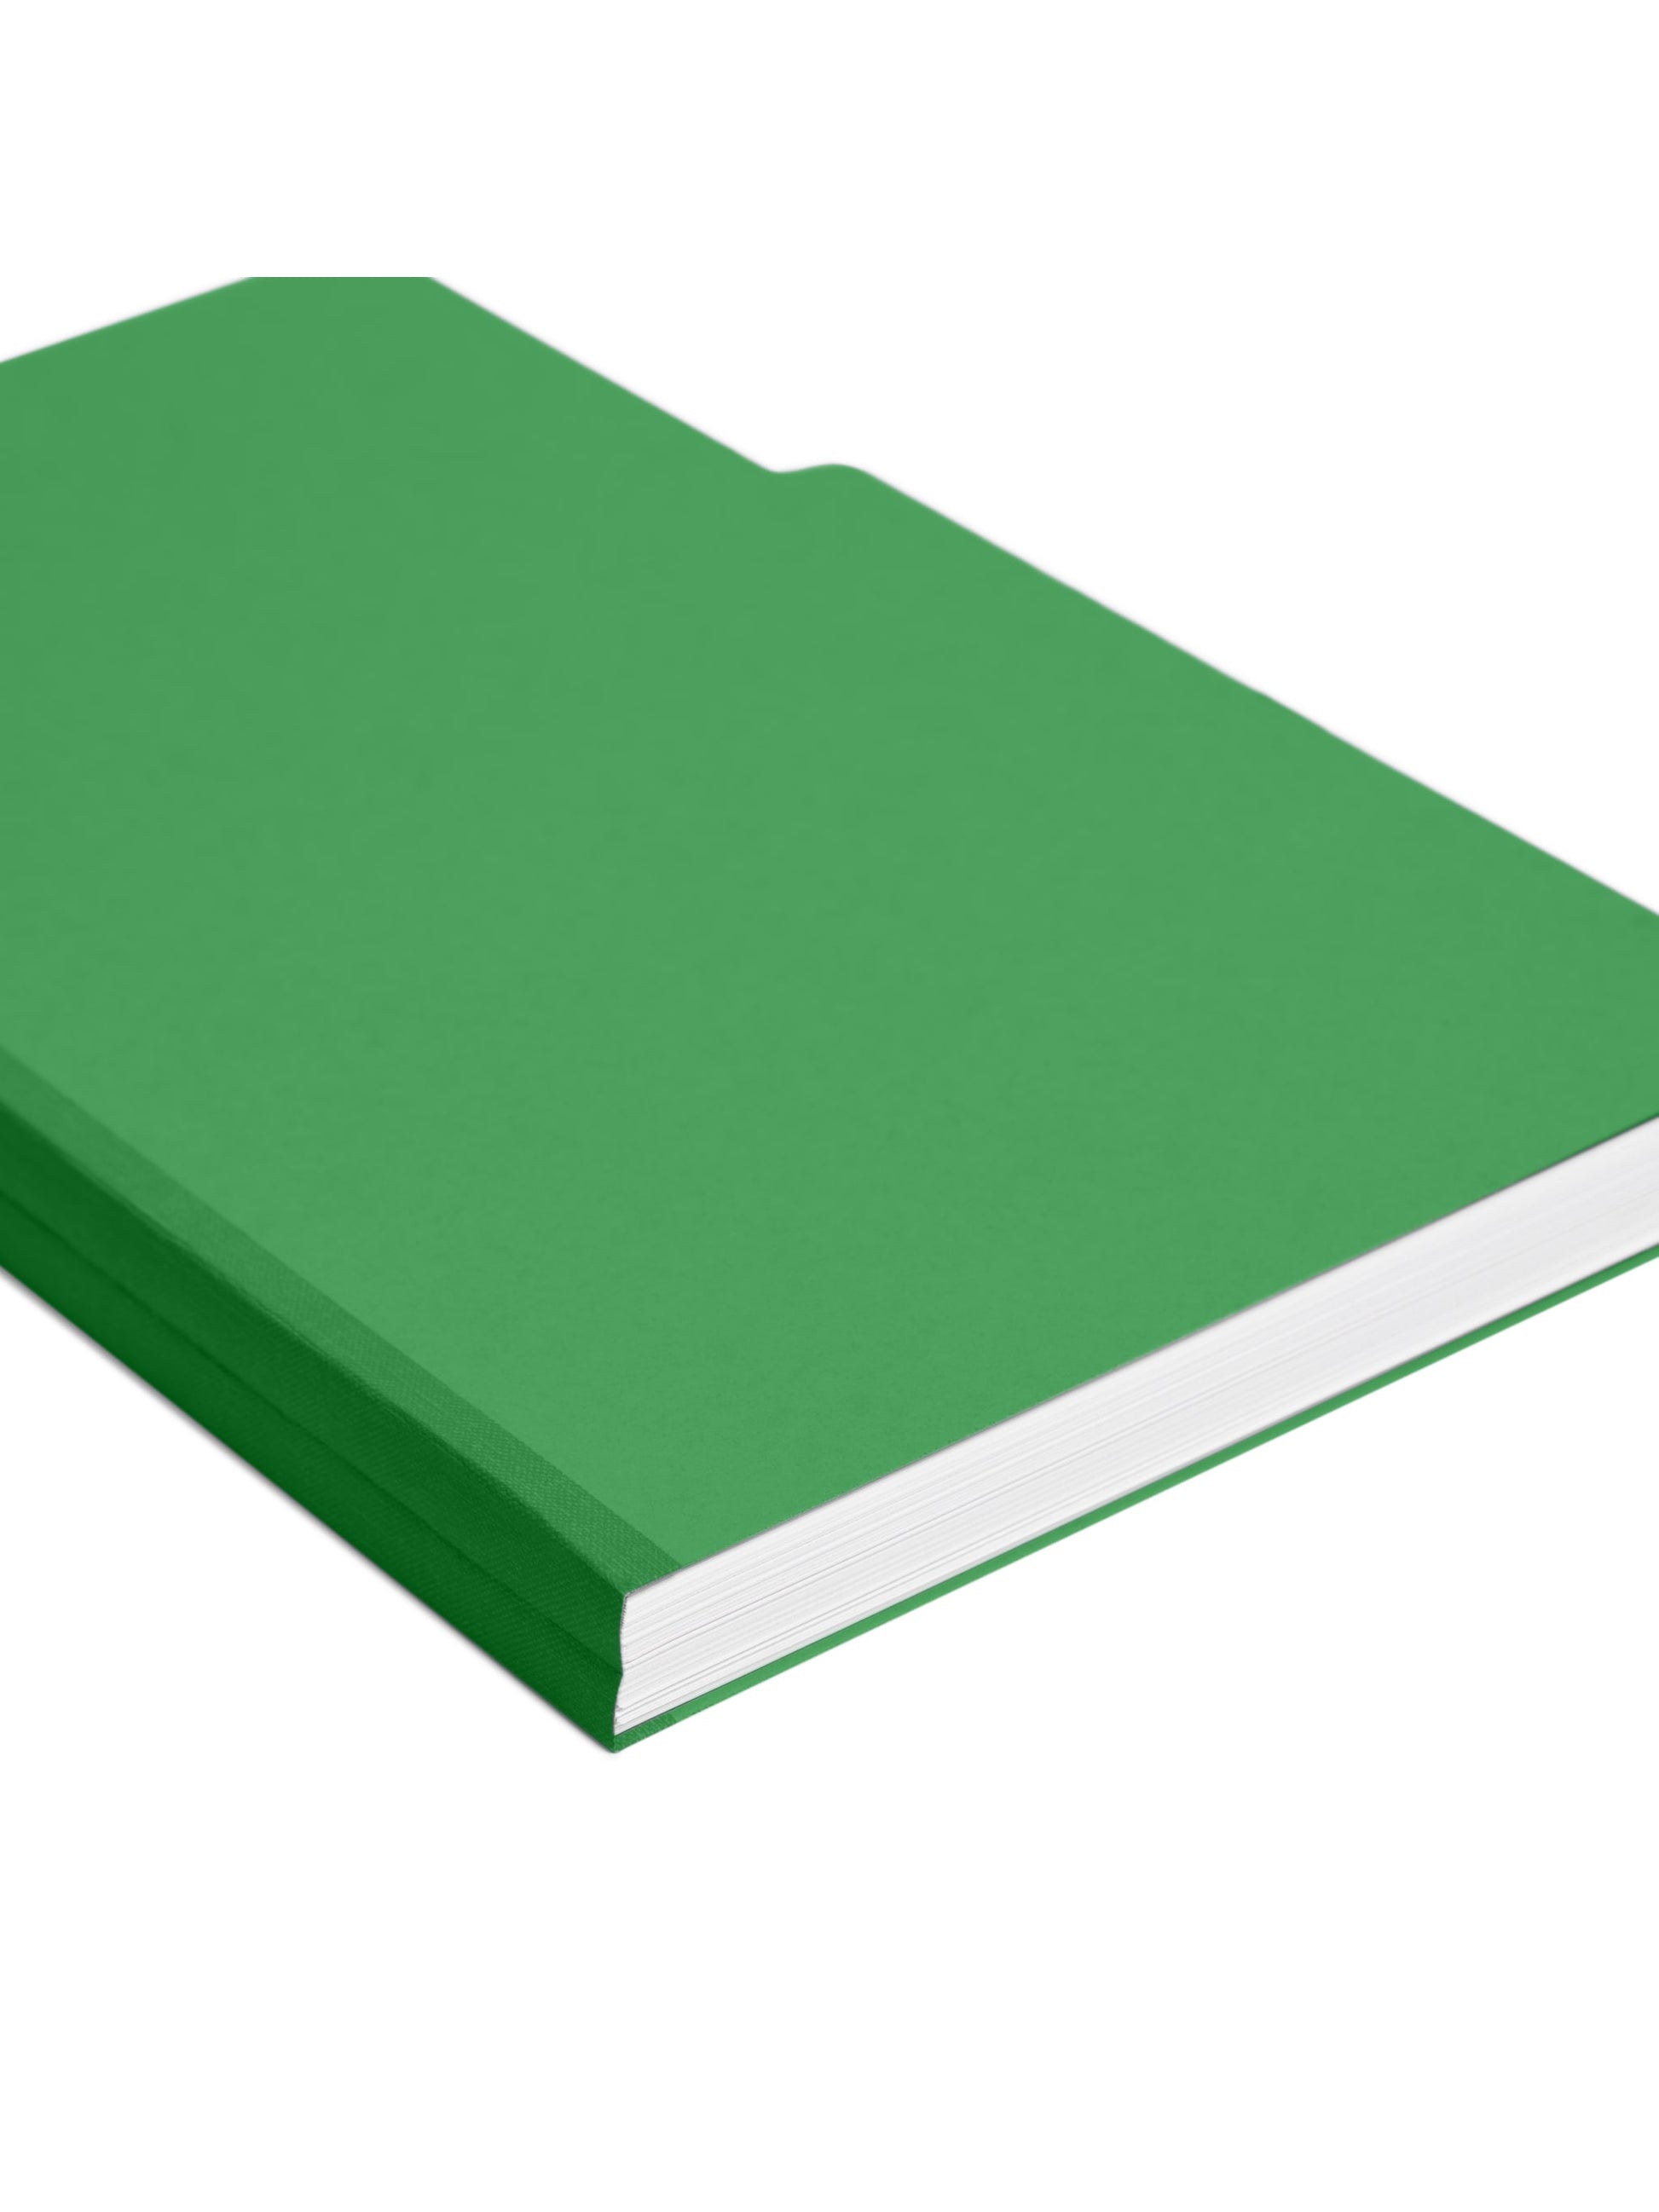 Pressboard File Folder, 1 inch Expansion, 1/3-Cut Tab, Green Color, Legal Size, Set of 25, 086486225465